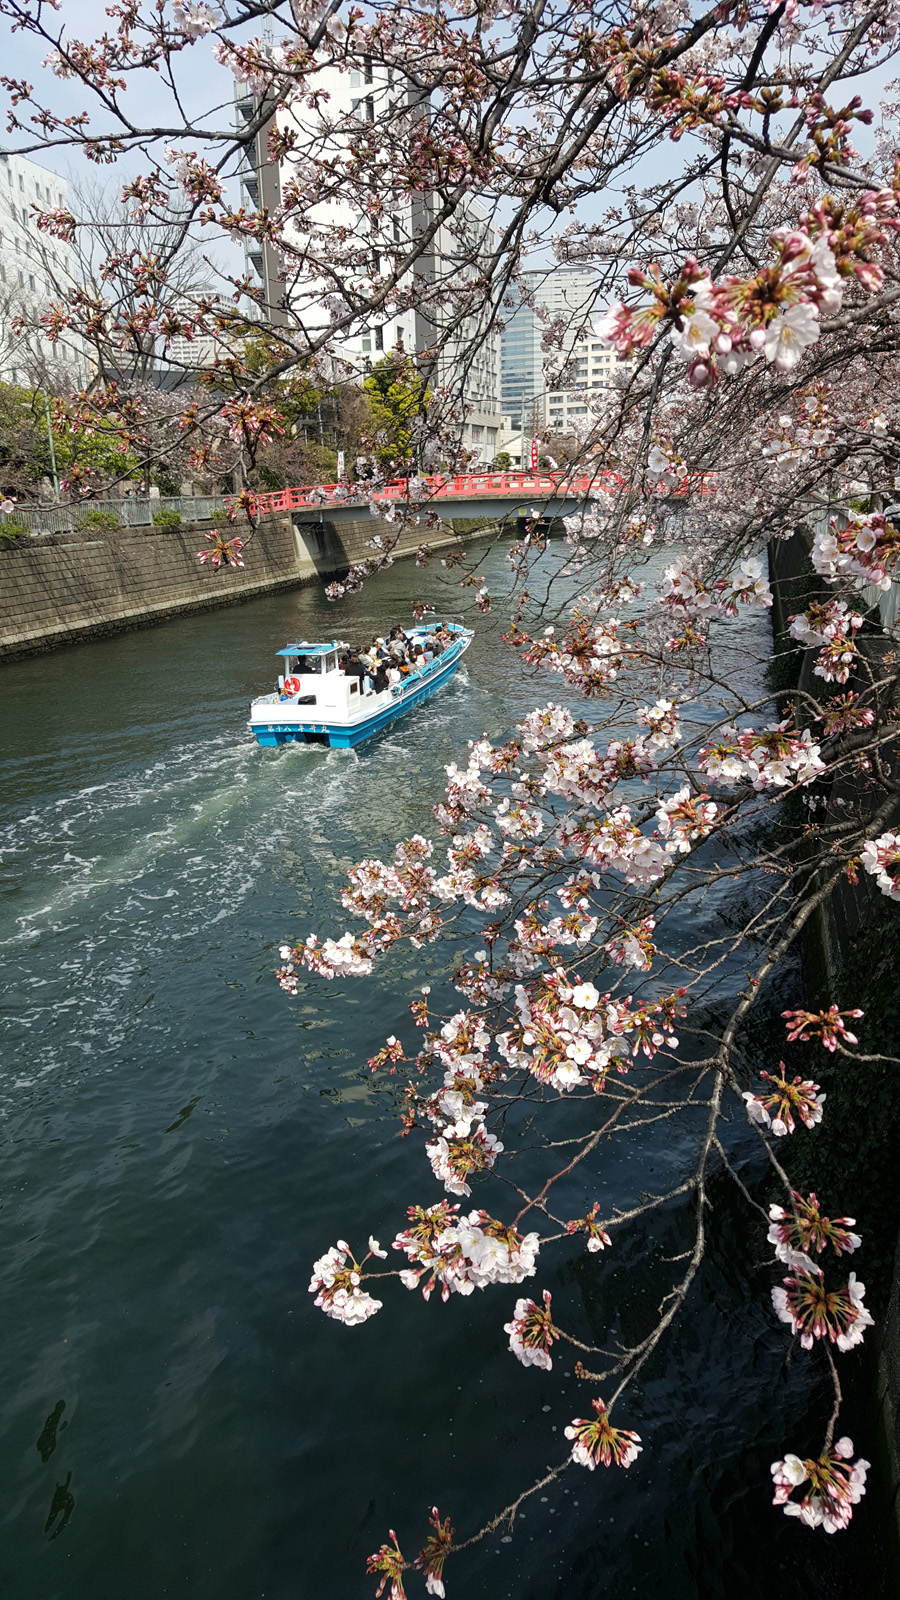 Cherry blossom viewing on the Meguro River, Shinagawa, Tokyo